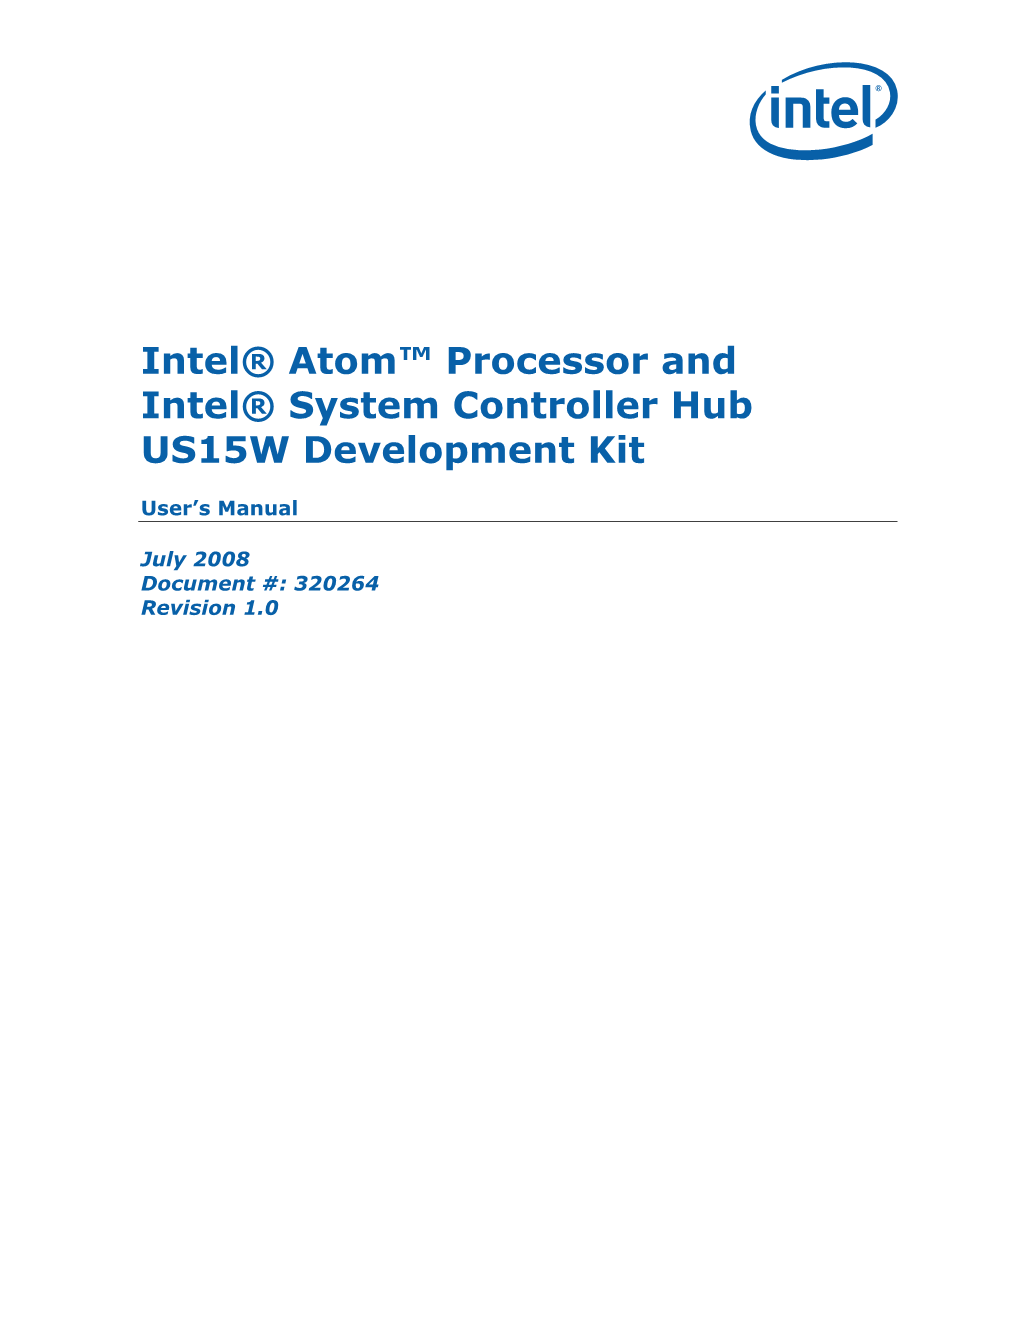 Intel® Atom™ Processor and Intel® System Controller Hub US15W Development Kit